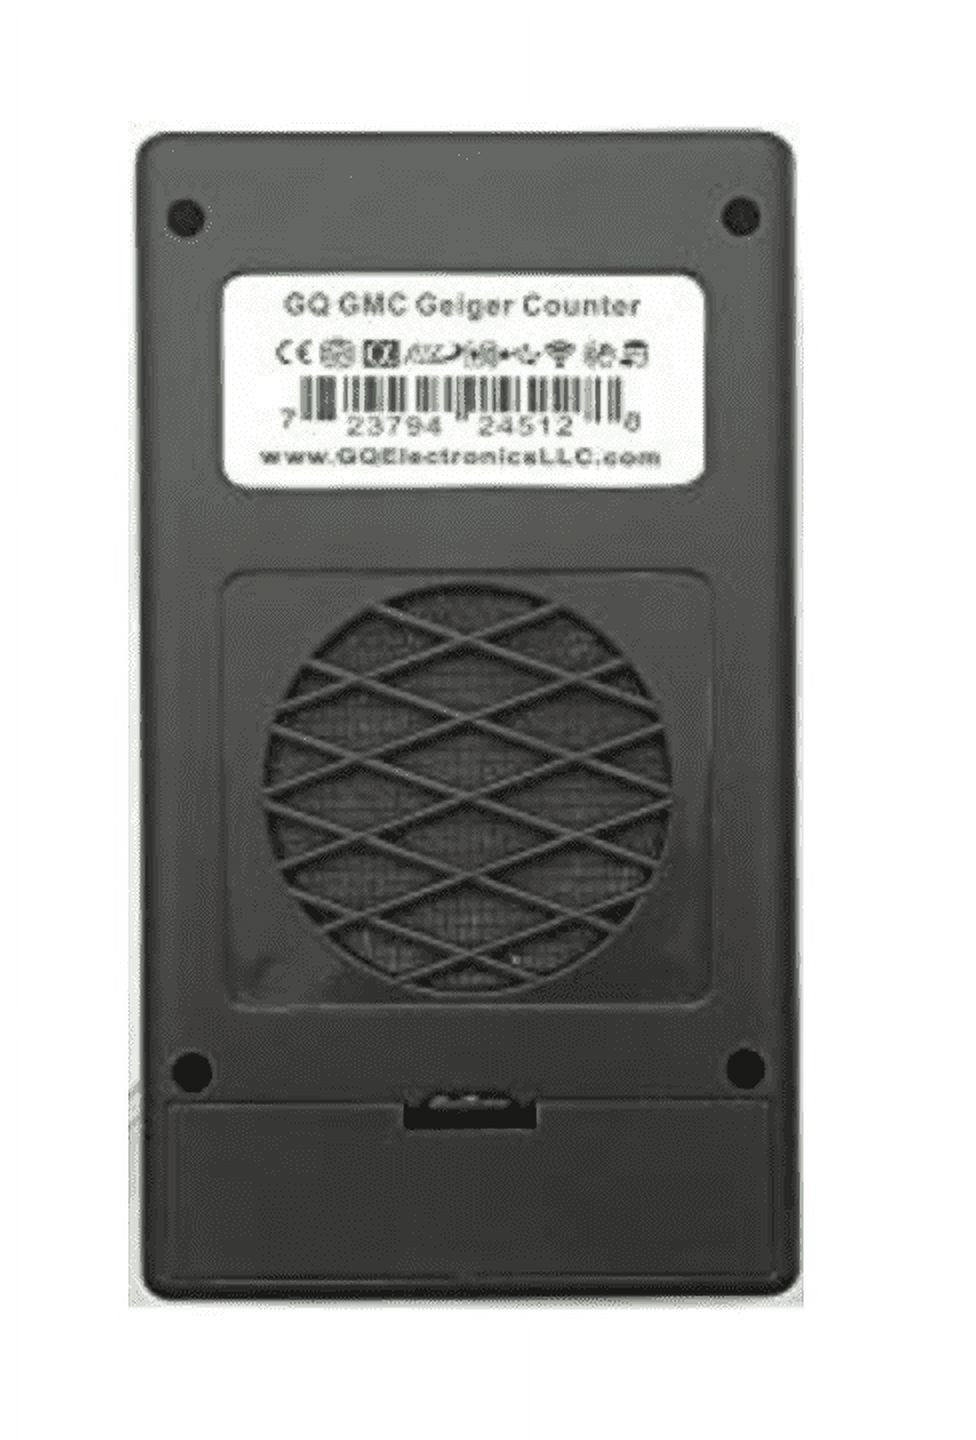 GMC-600 Plus Geiger Counter Radiation Detector